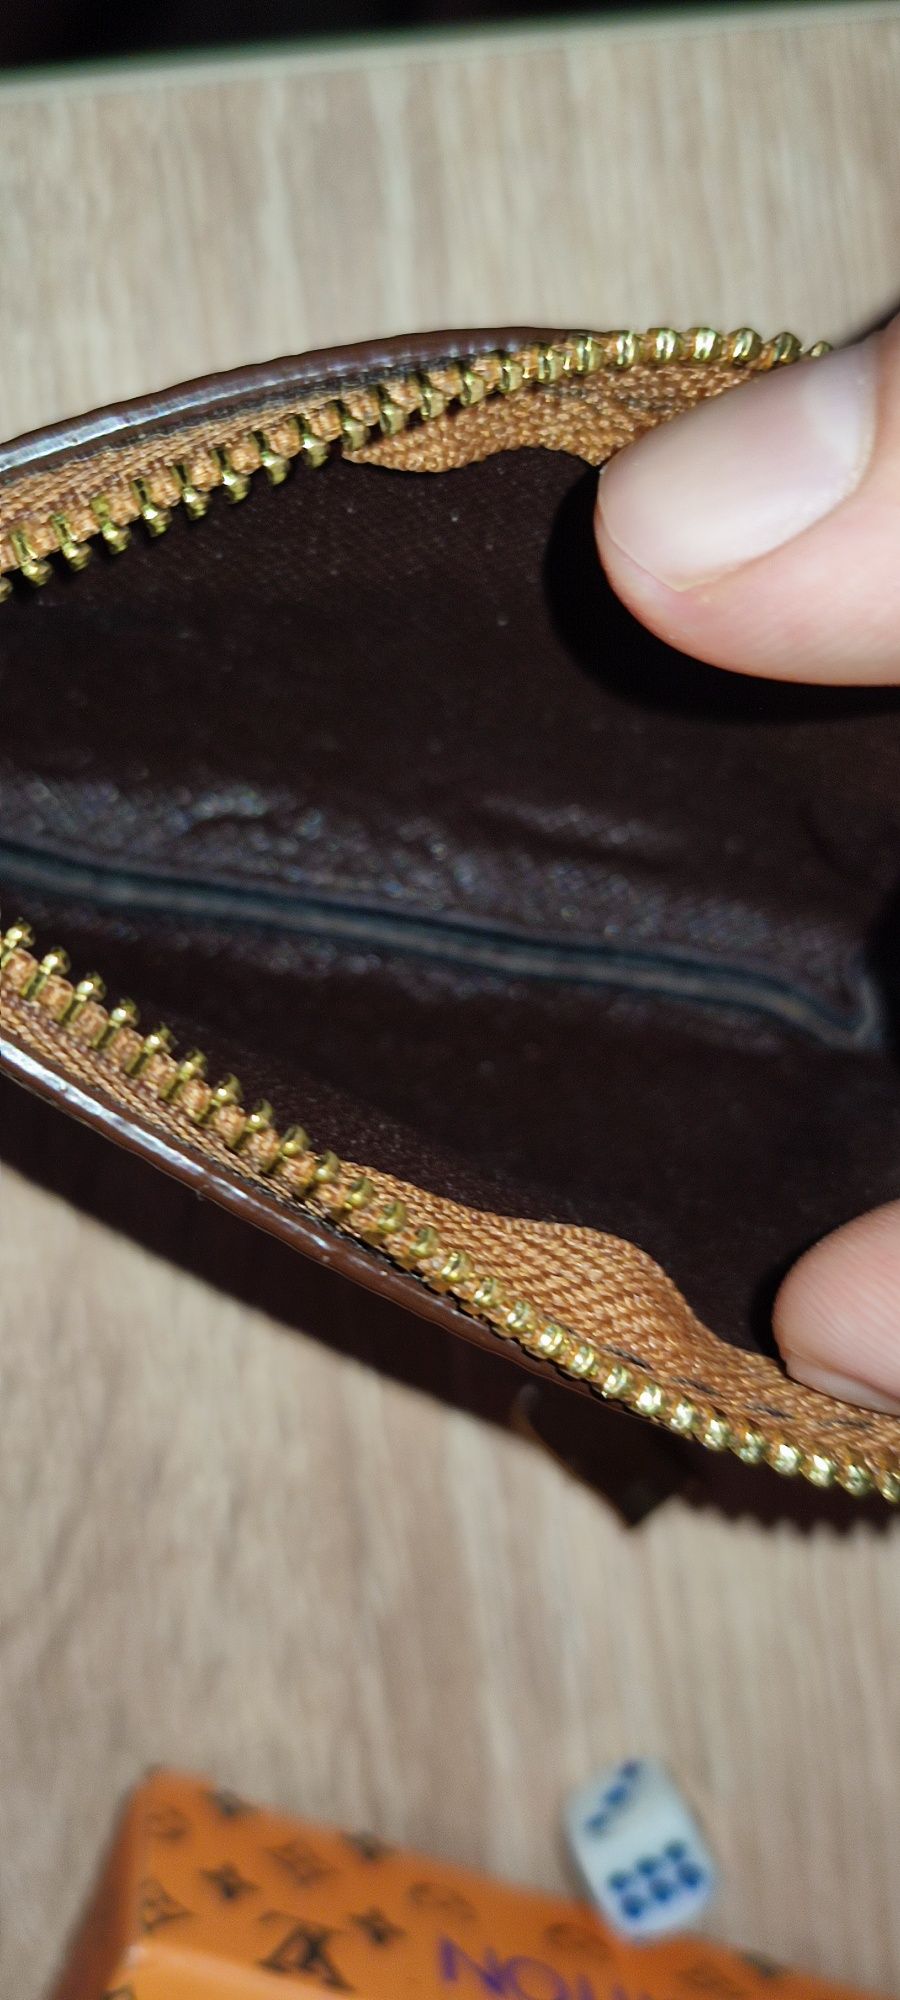 Vând mini portofel Louis Vuitton 1:1